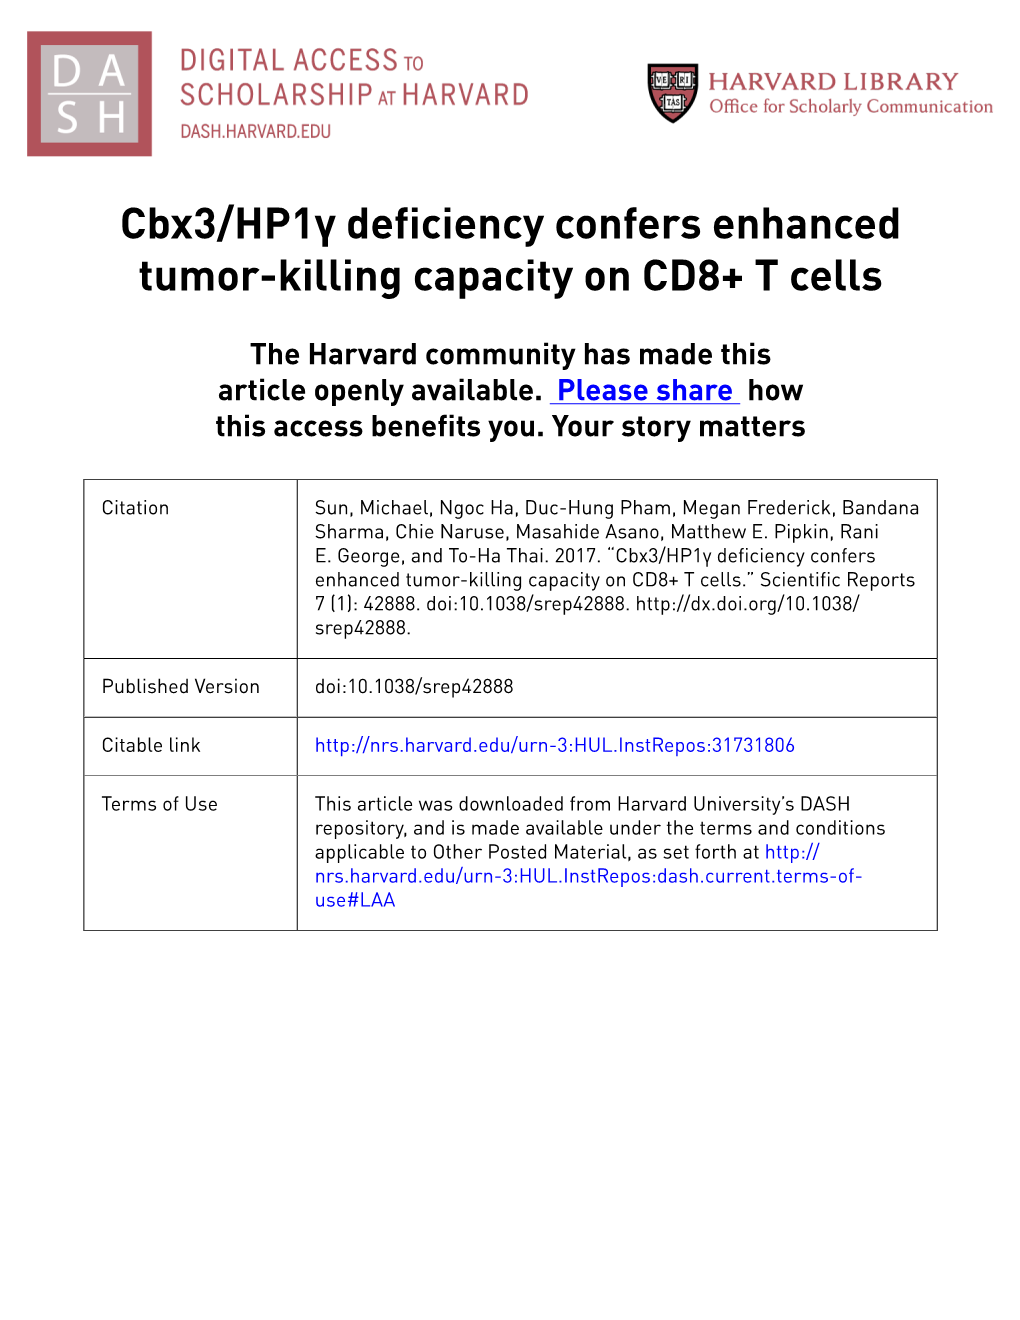 Cbx3/HP1 Deficiency Confers Enhanced Tumor-Killing Capacity On